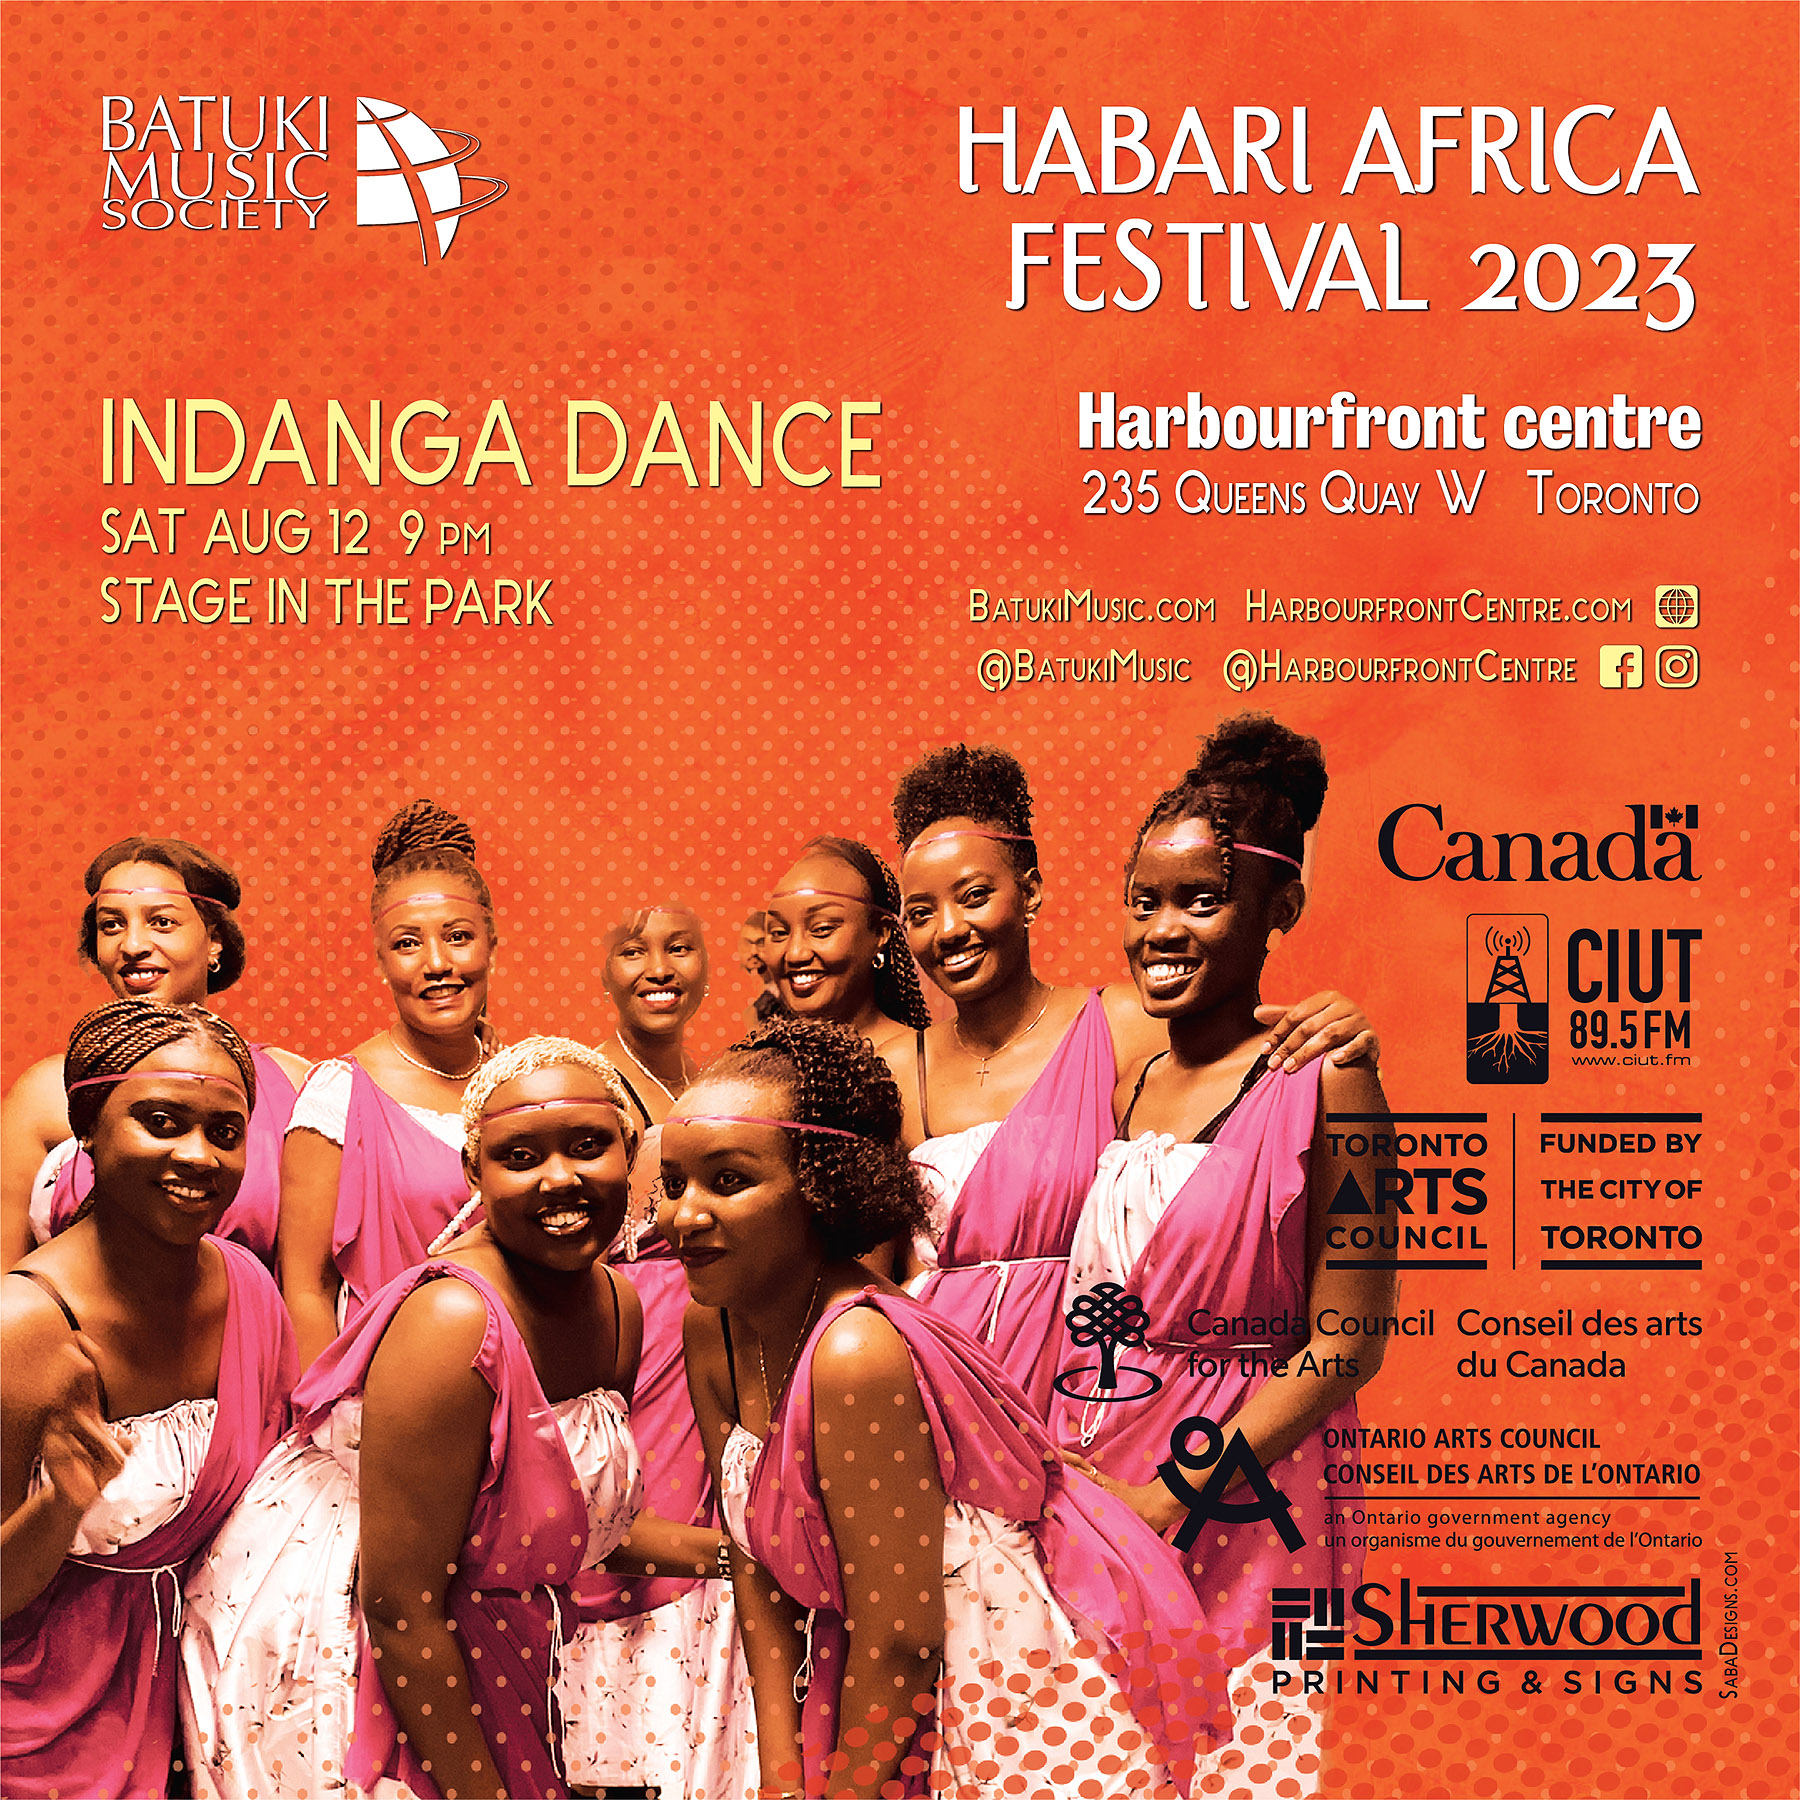 Habari Africa Live Festival 2023 by Batuki Music Society Indanga Dance